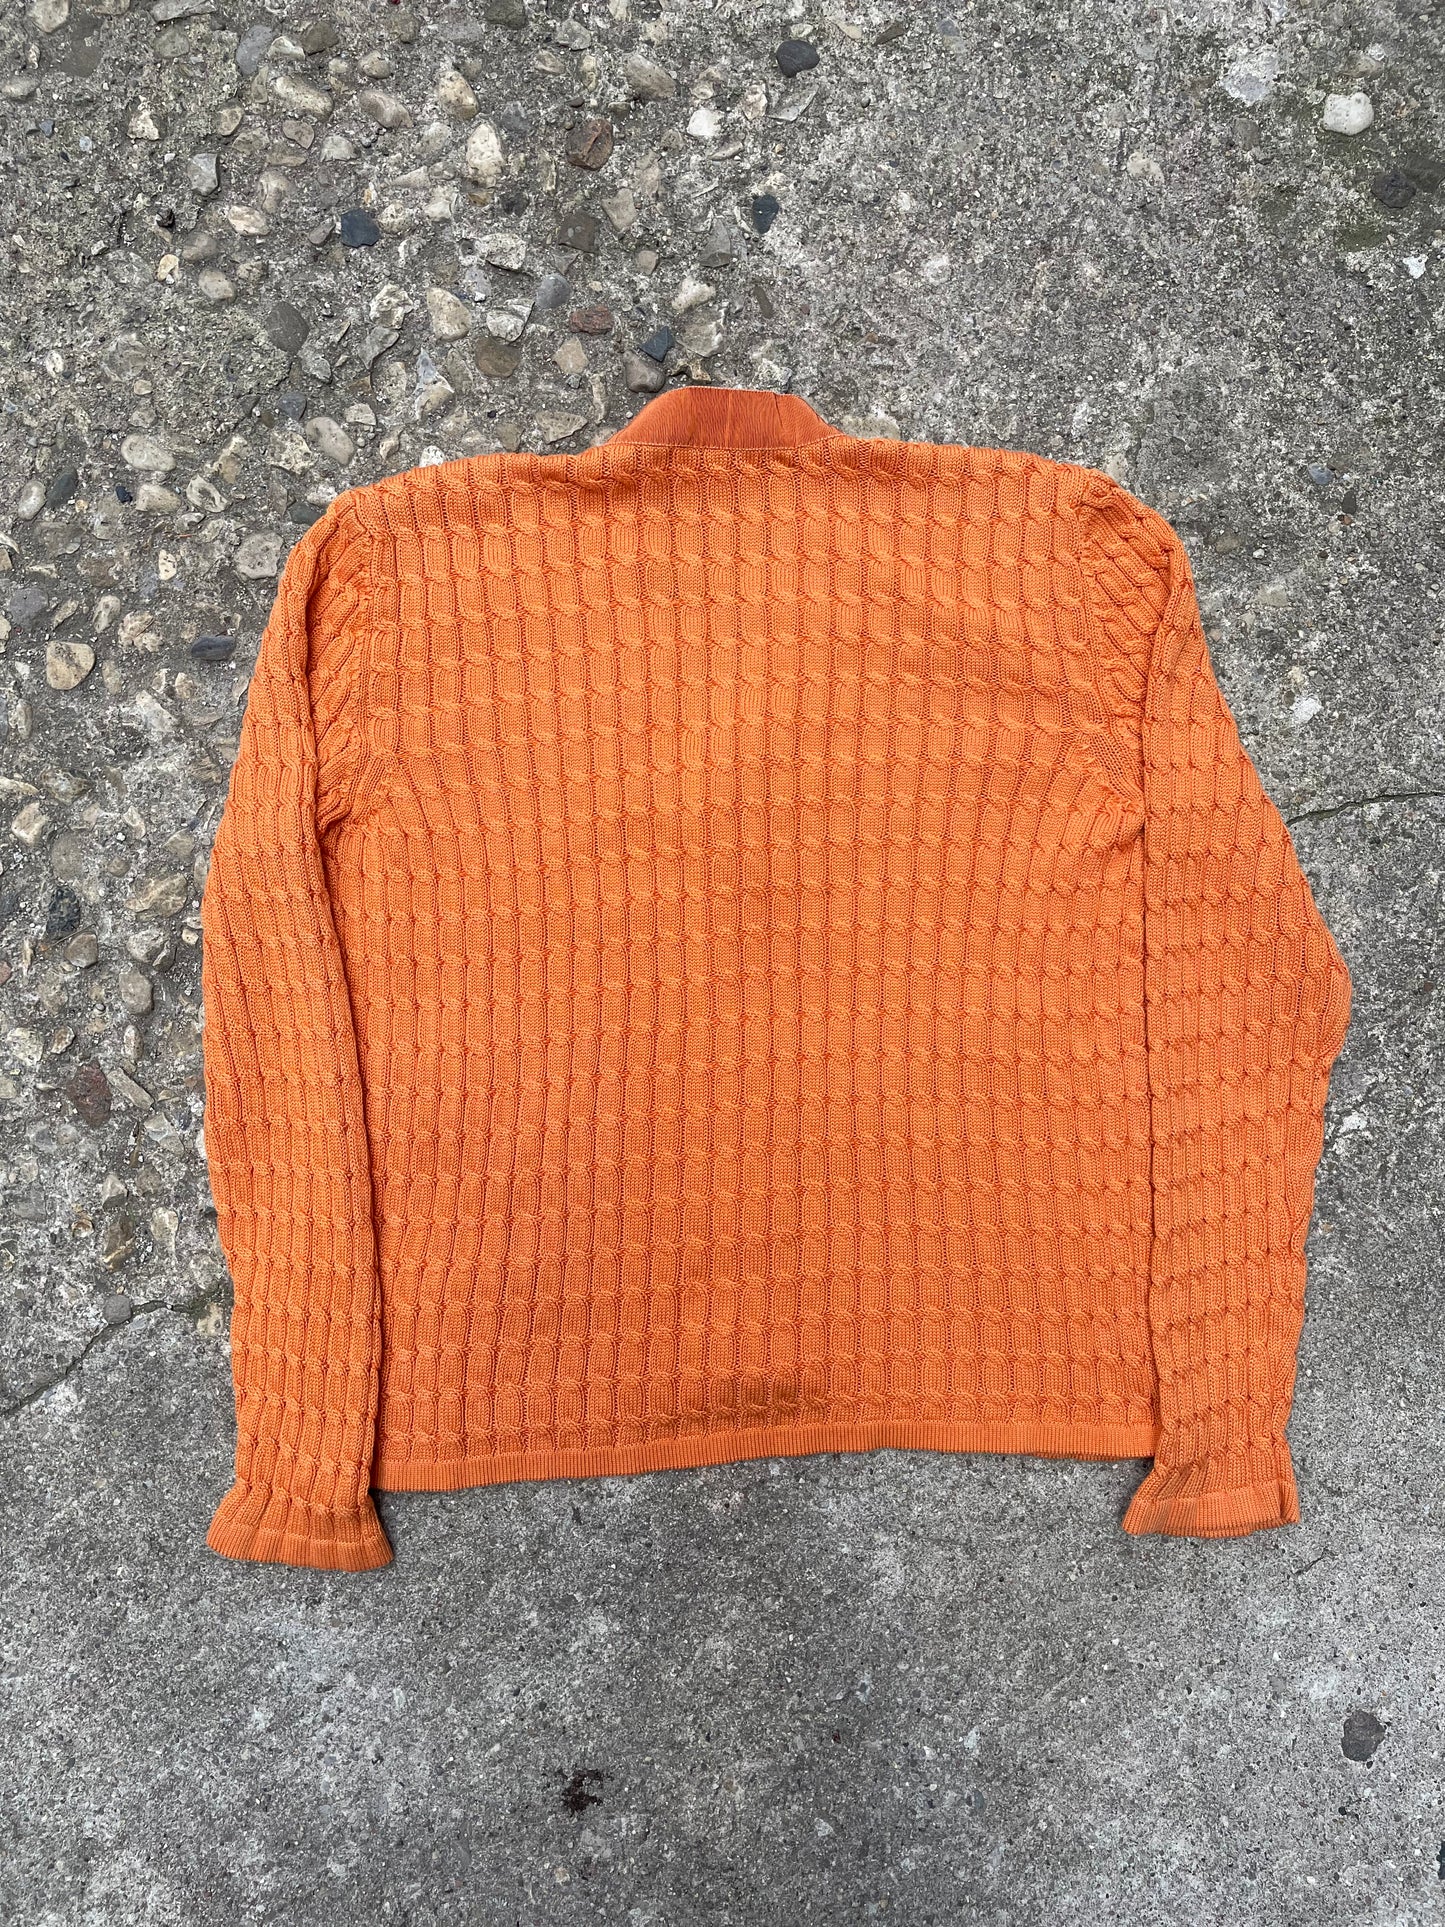 1980's/1990's Salvatore Ferragamo Wool & Rayon Knit Cardigan Sweater - M